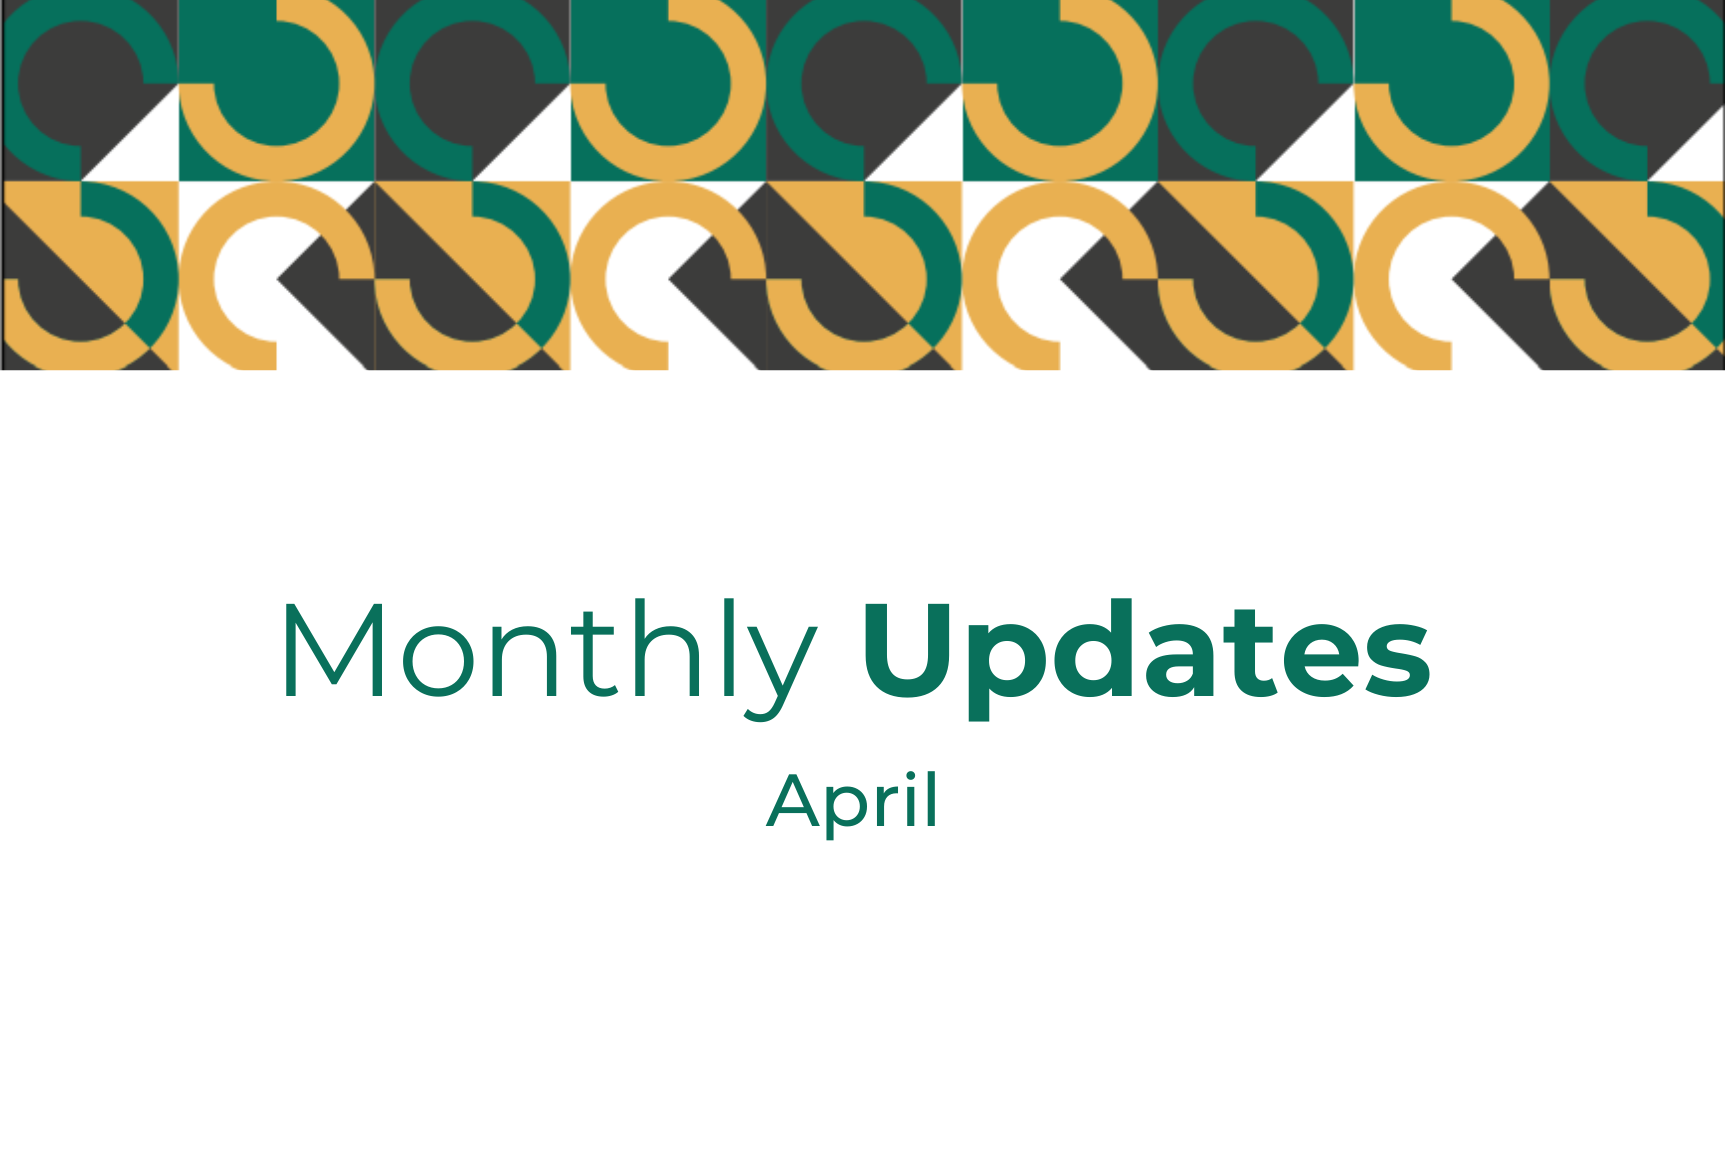 Sertifier Monthly Updates April